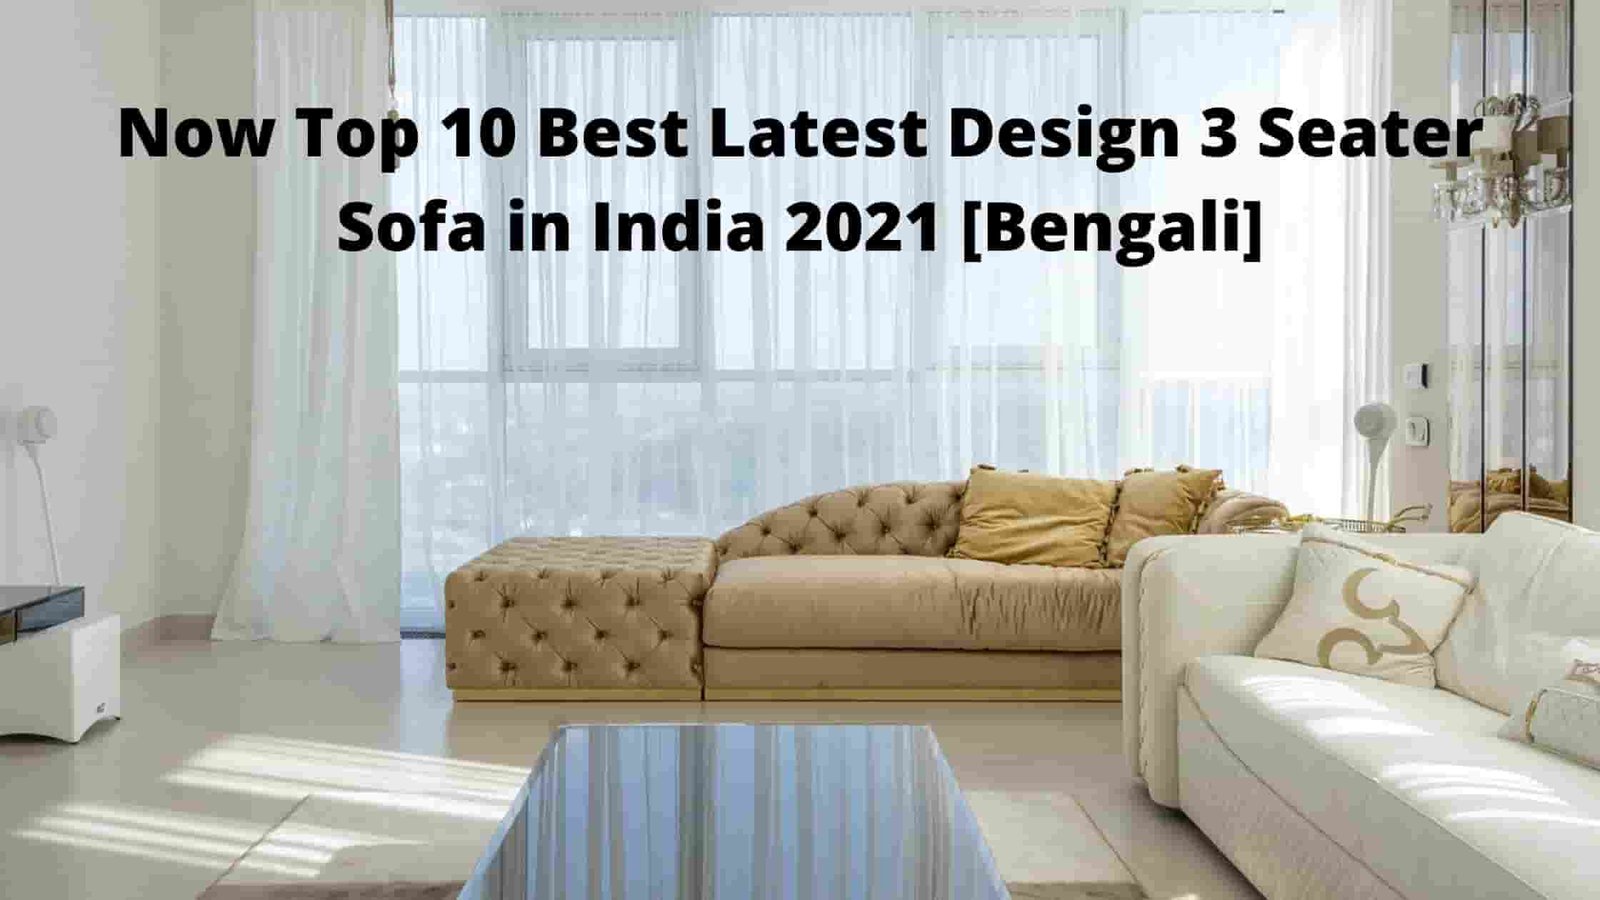 Now Top 10 Best Latest Design 3 Seater Sofa in India 2021 [Bengali]